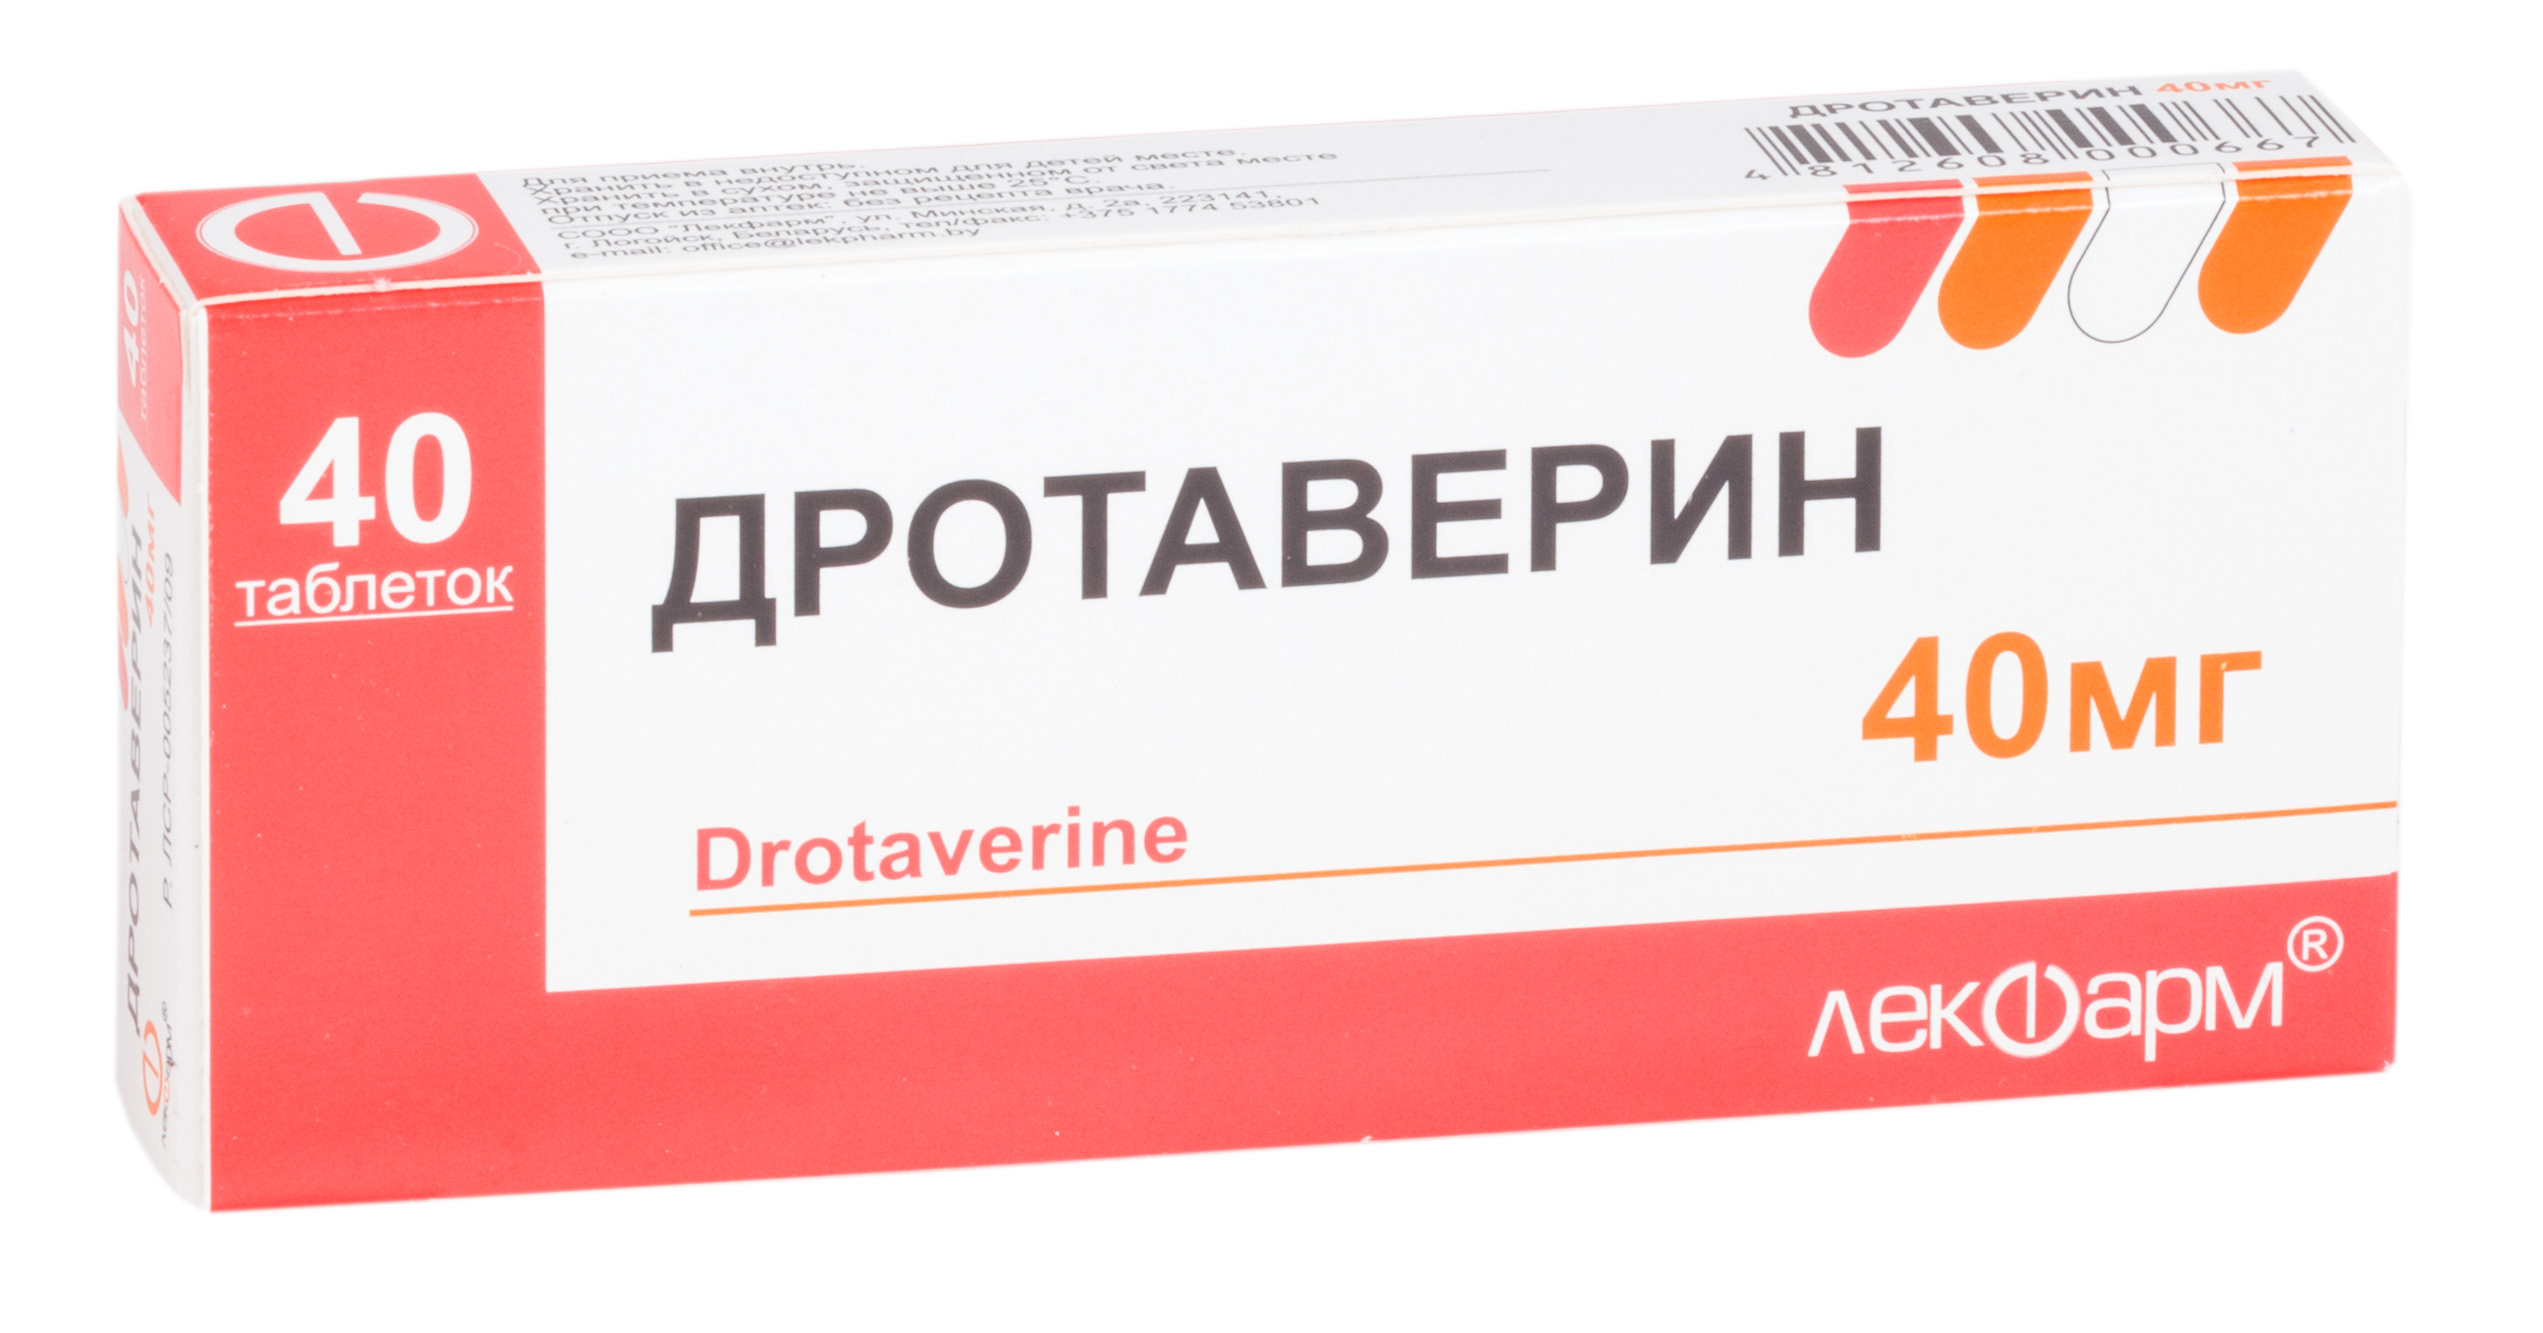 Дротаверин табл. 40 мг №40